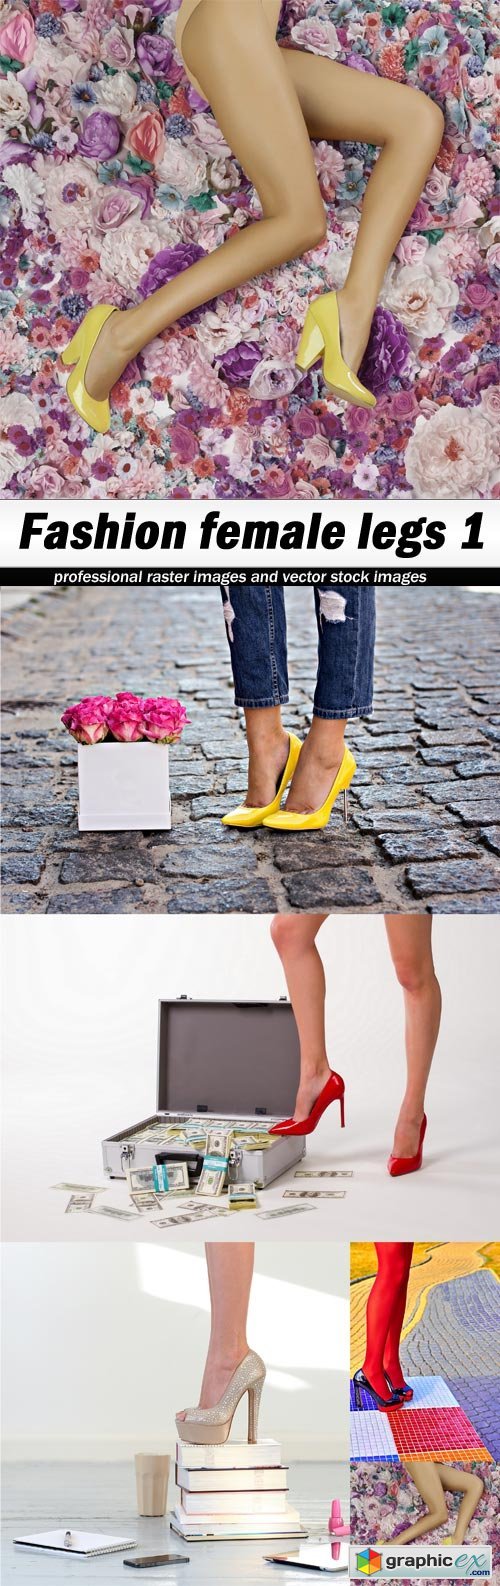 Fashion female legs 1-5xUHQ JPEG